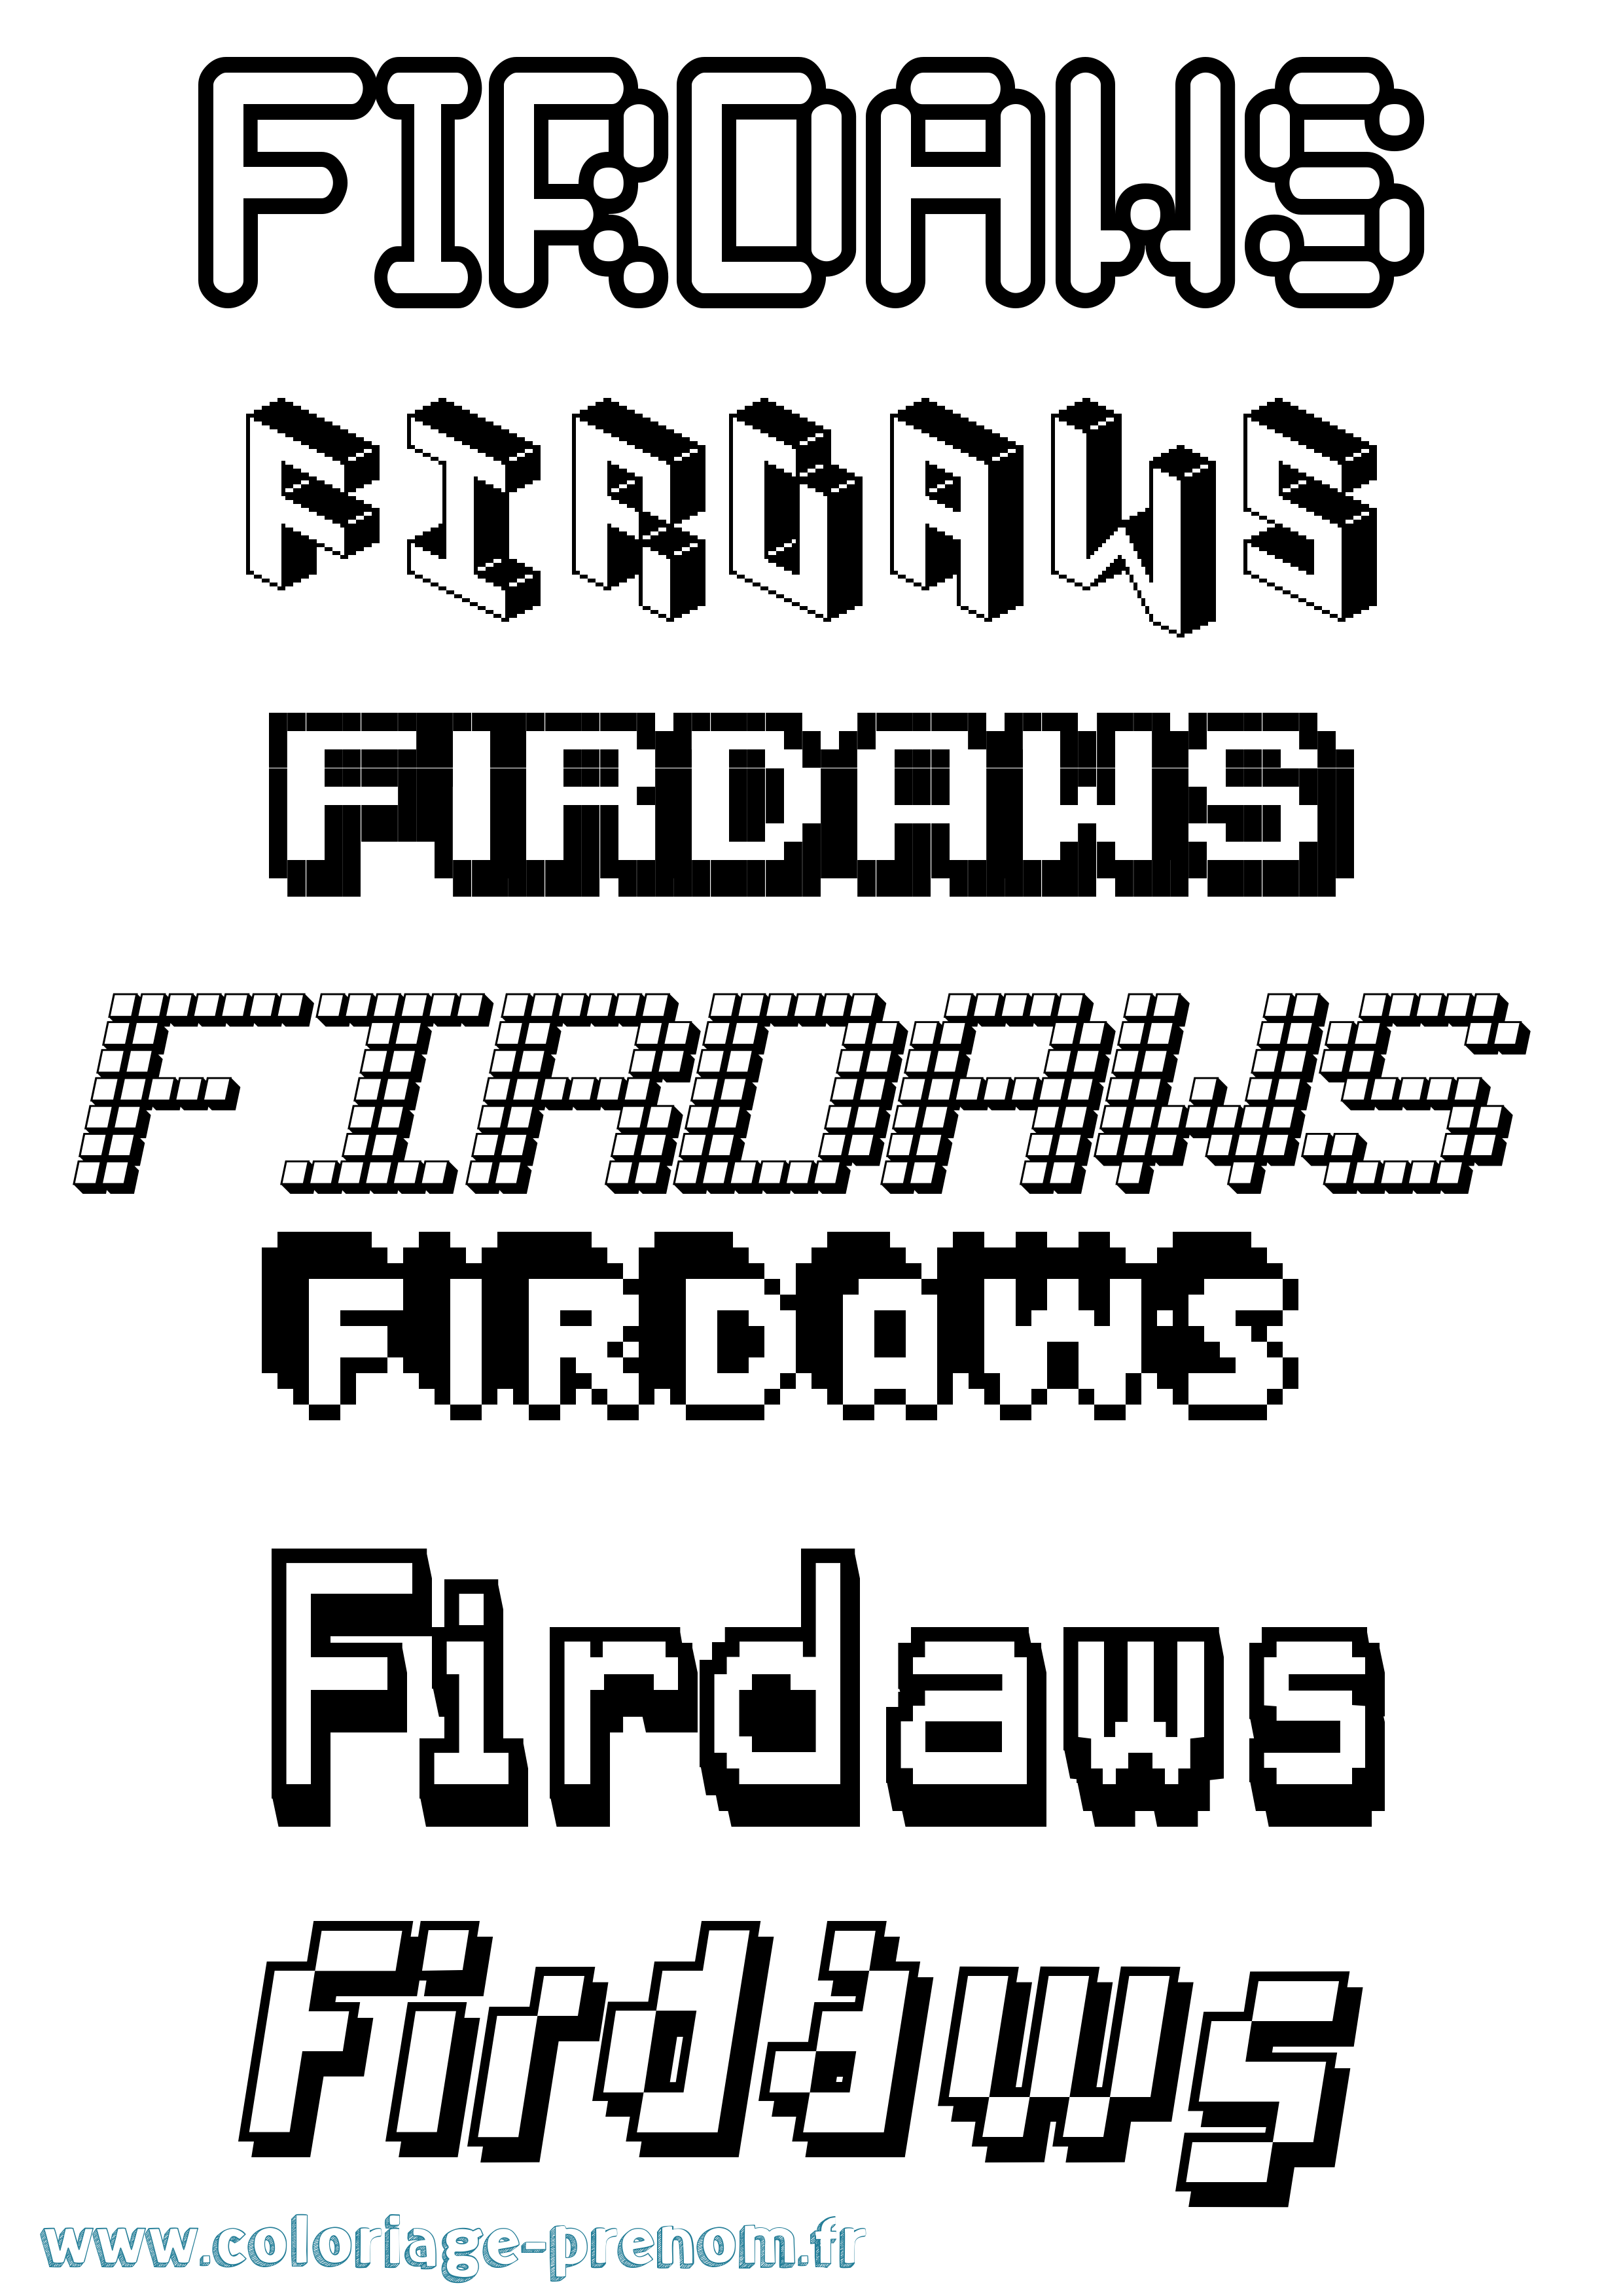 Coloriage prénom Firdaws Pixel